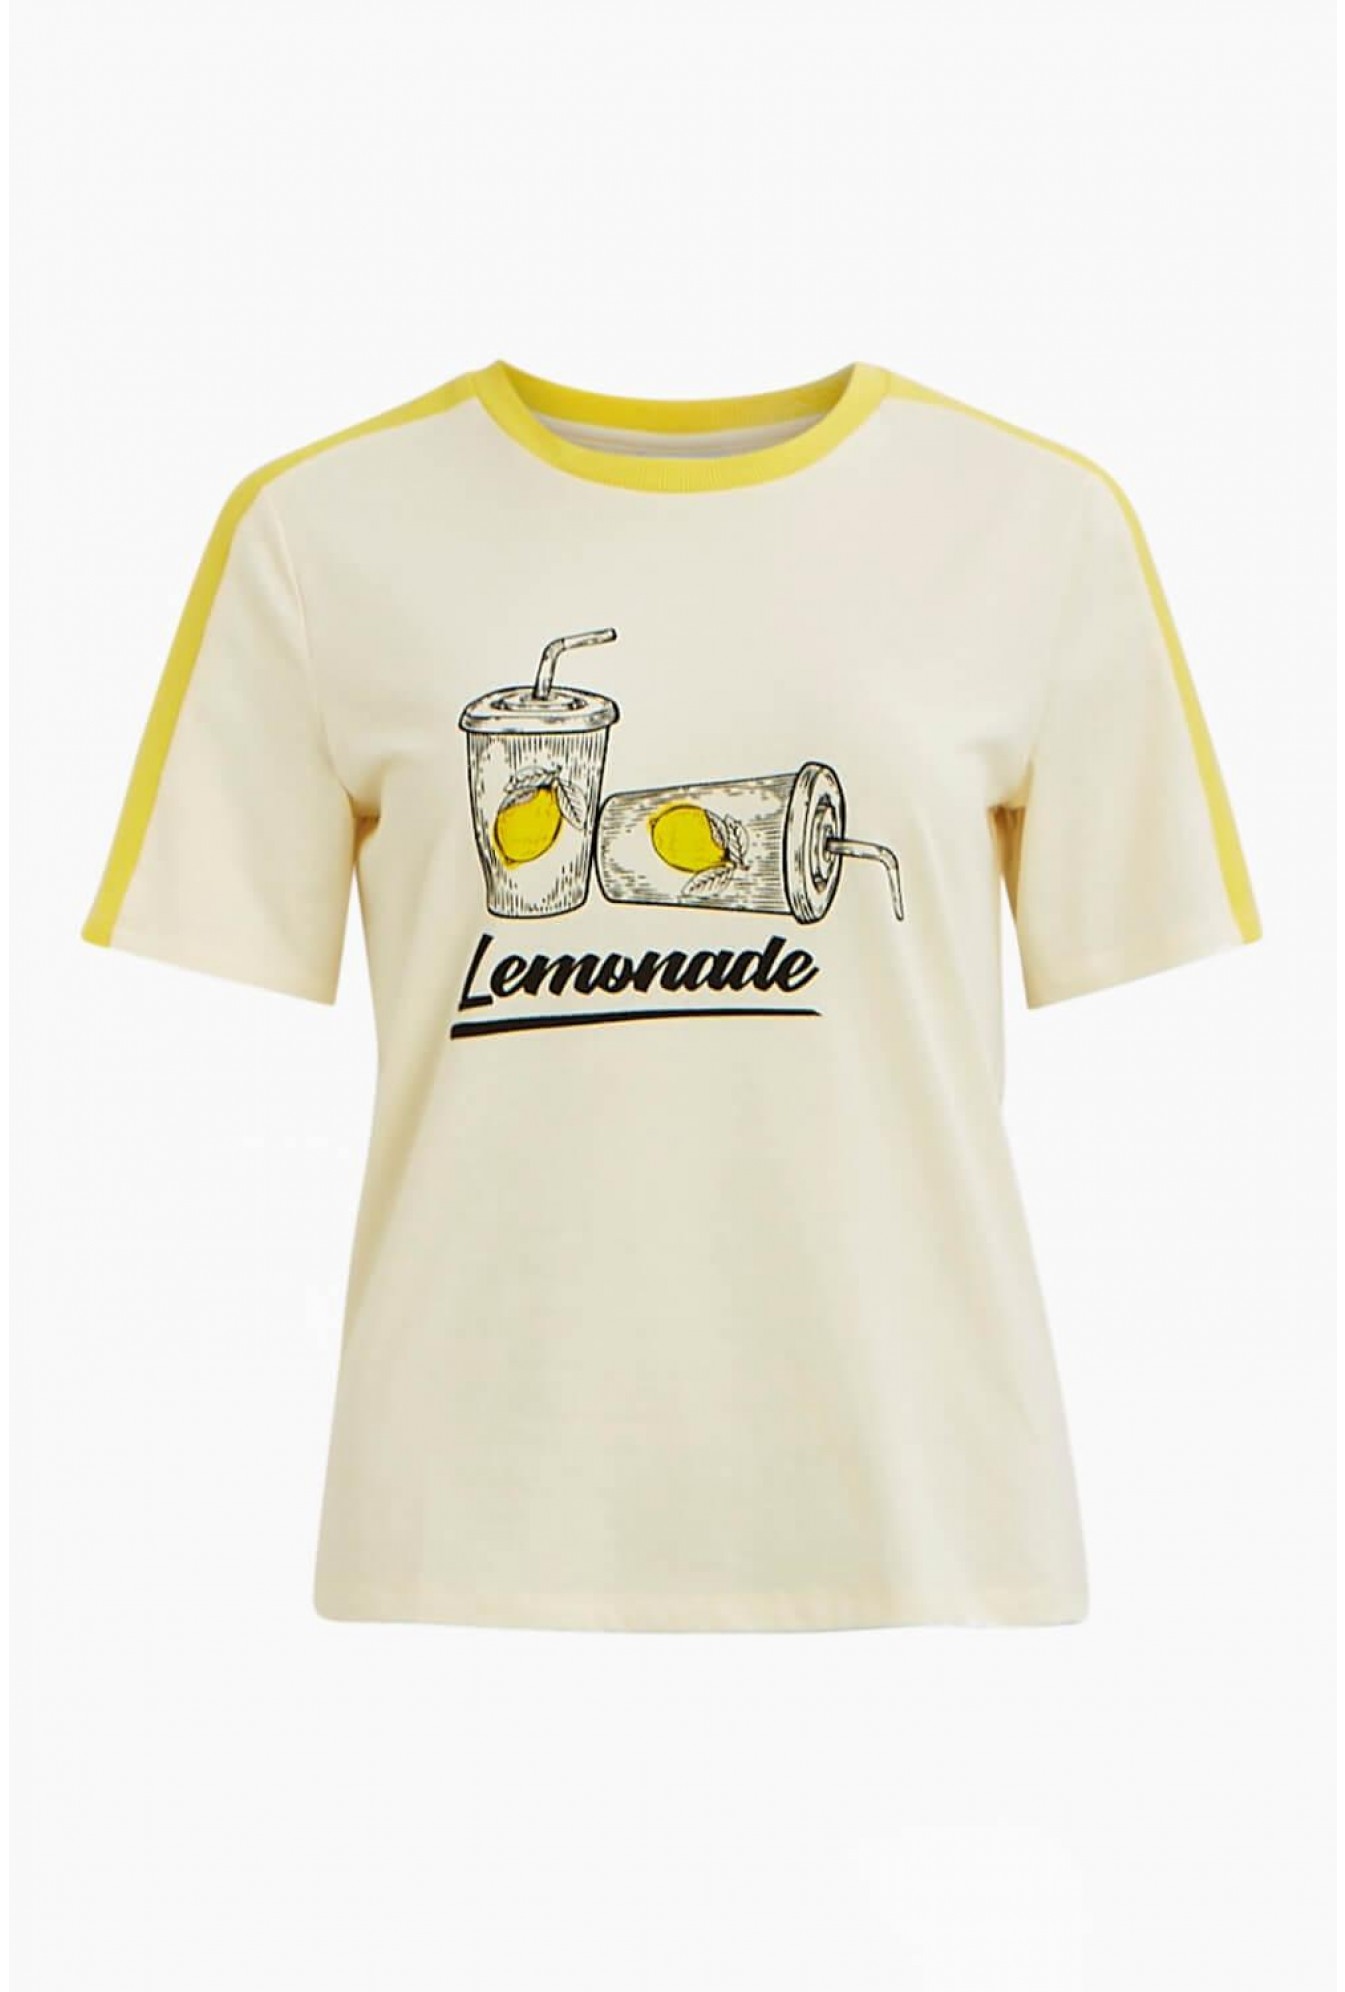 Vila VICattia Lemonade T-Shirt in Yellow | iCLOTHING